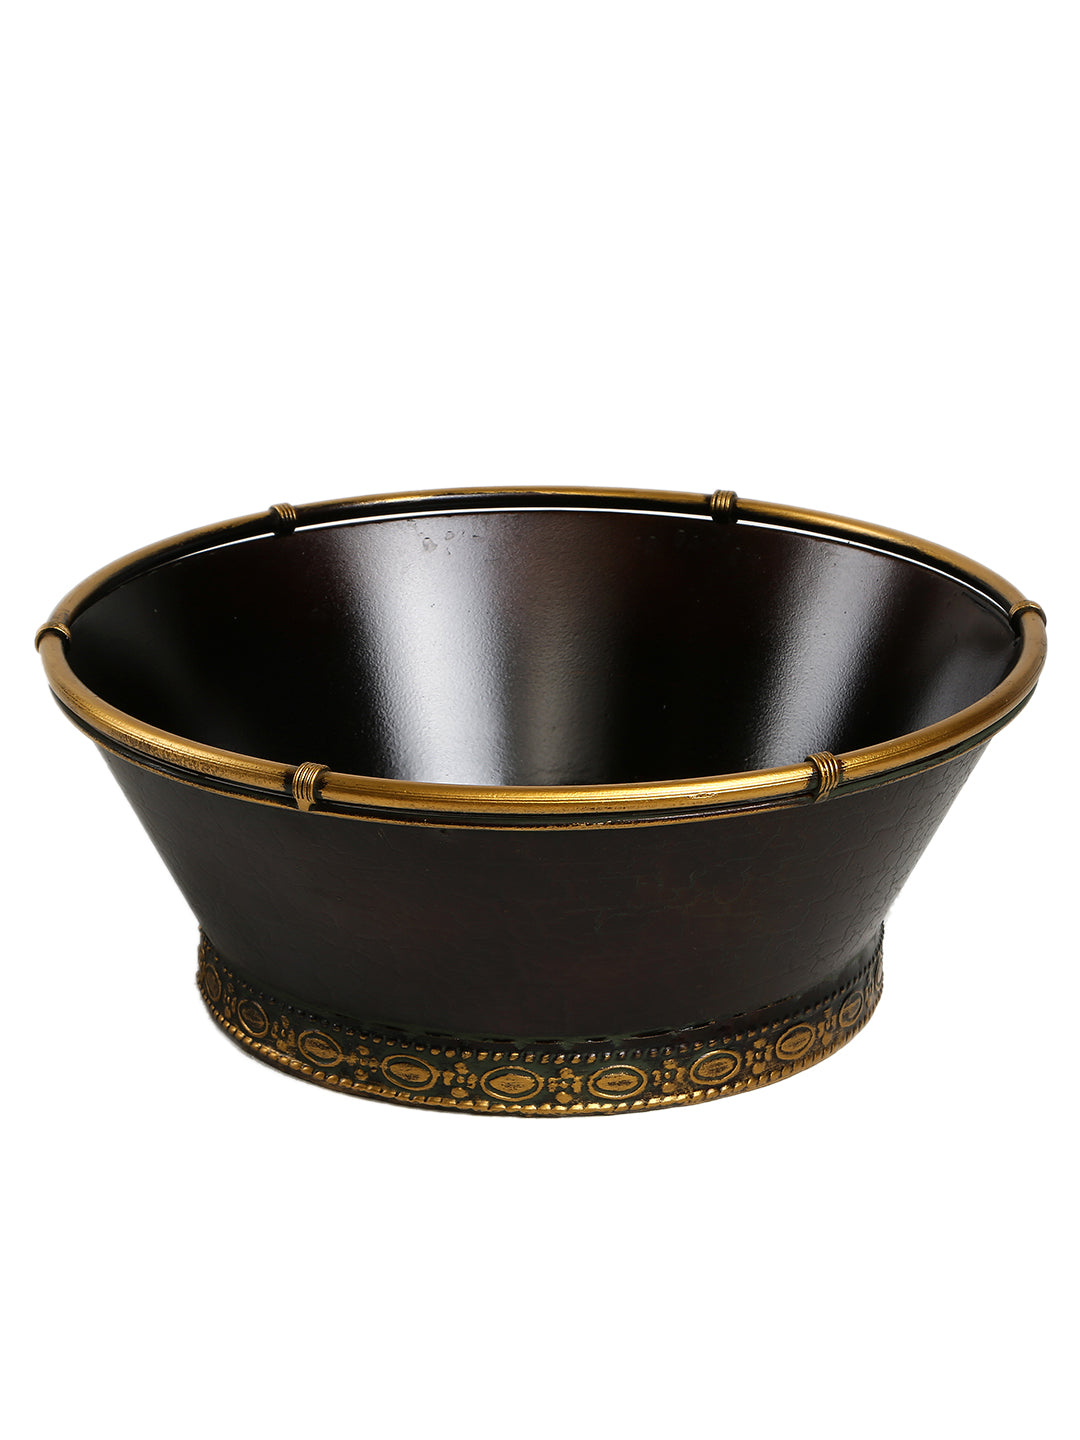 Hosley Decorative Iron Bowl